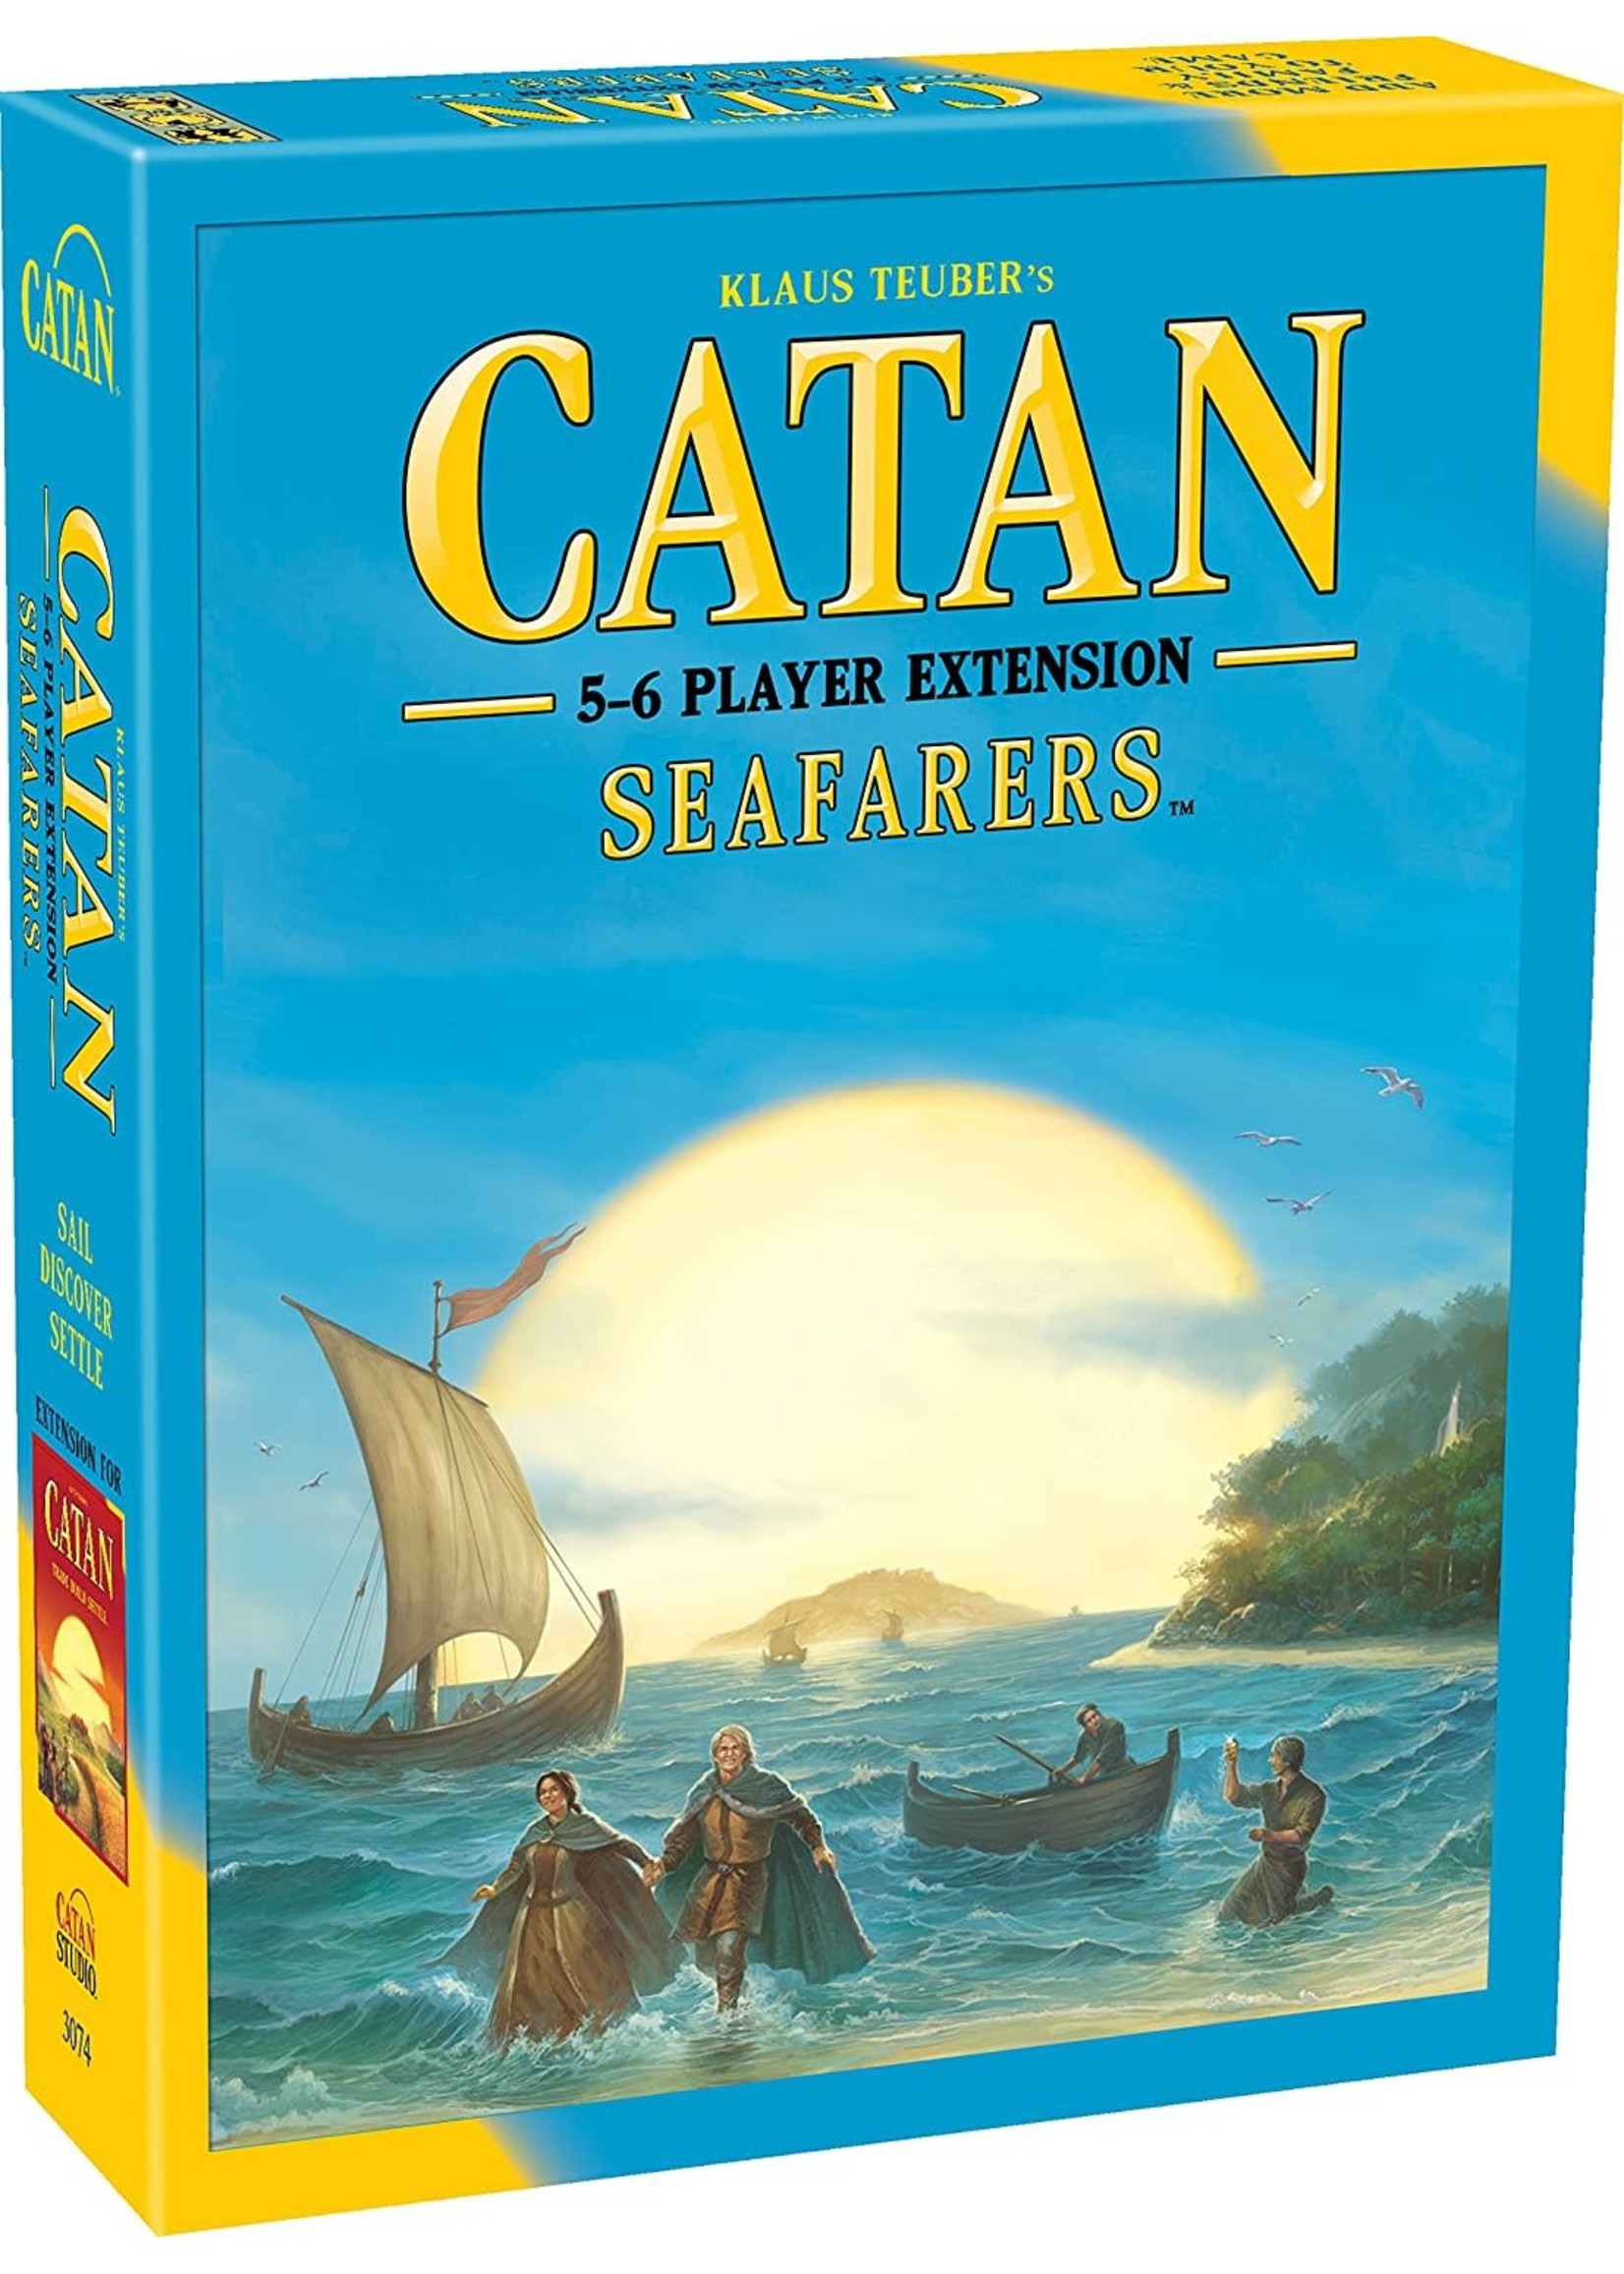 Catan Studio Catan Seafarers 5-6 Player Expansion